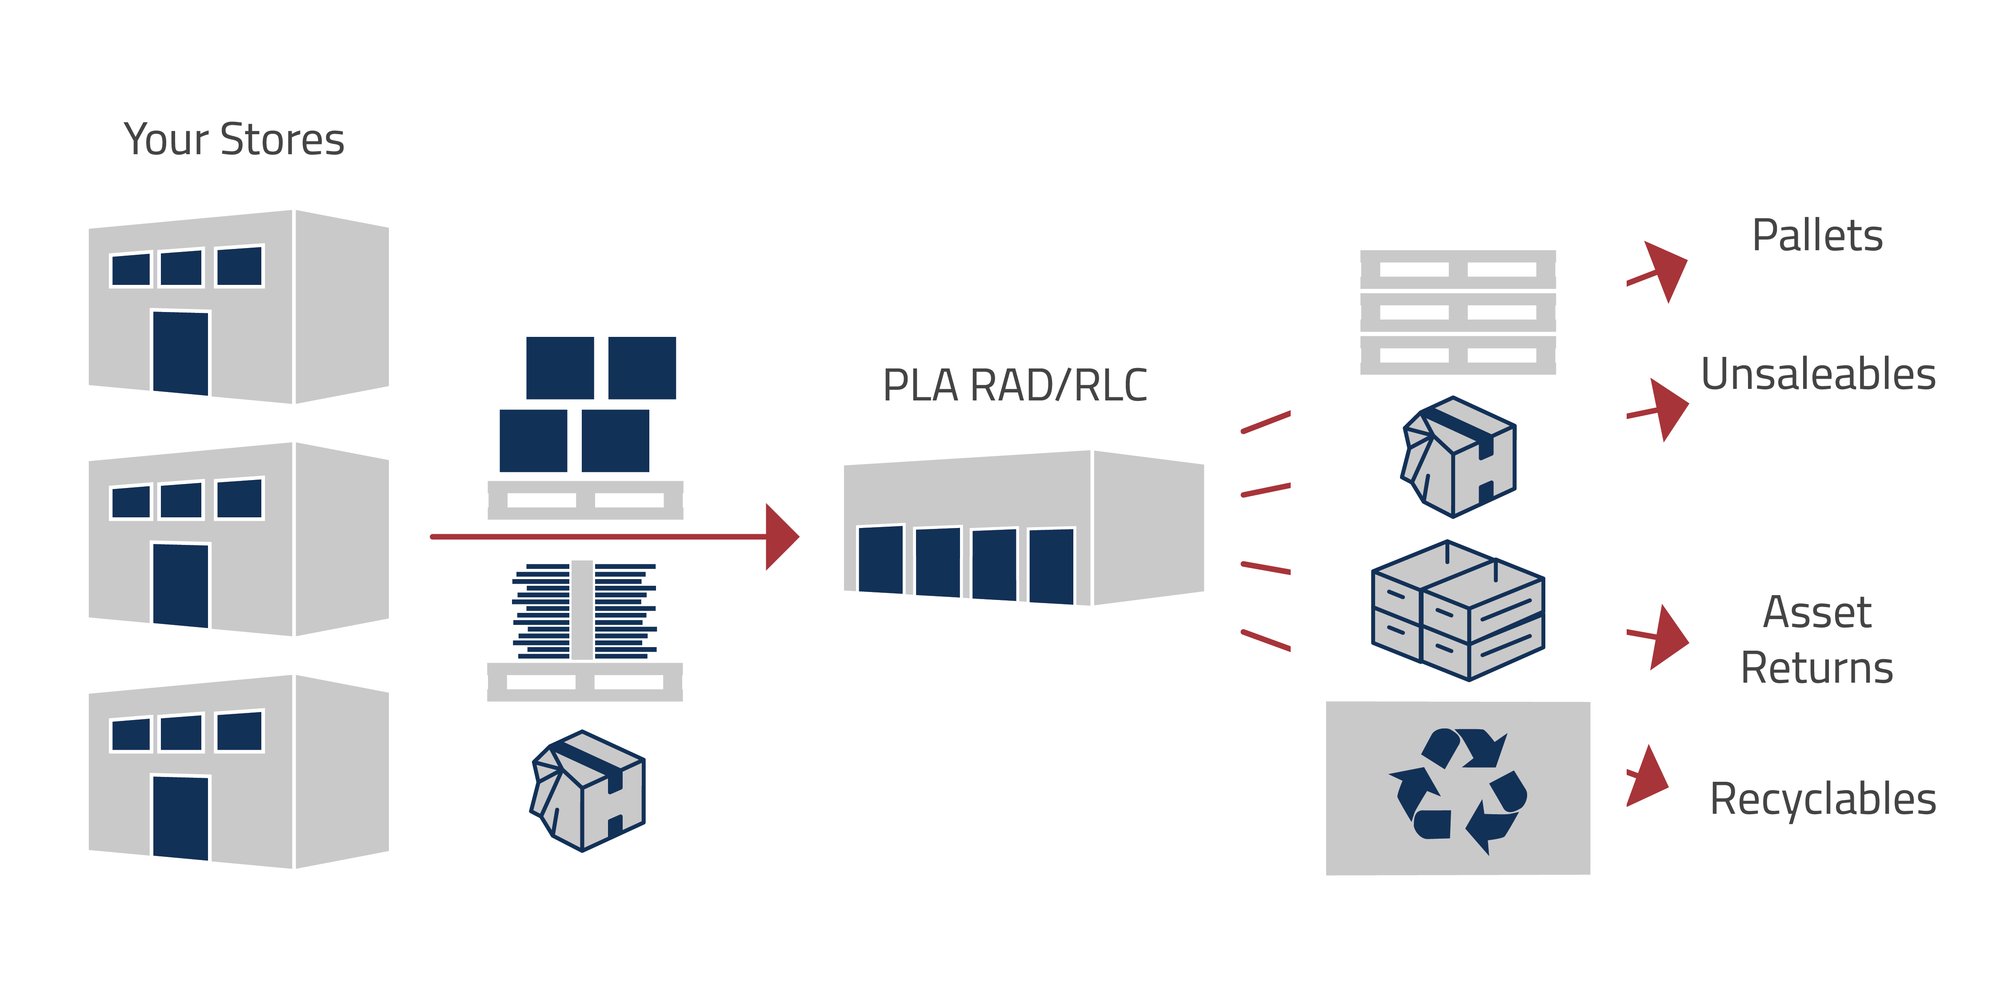 Image showing how PLA reverse logistics works